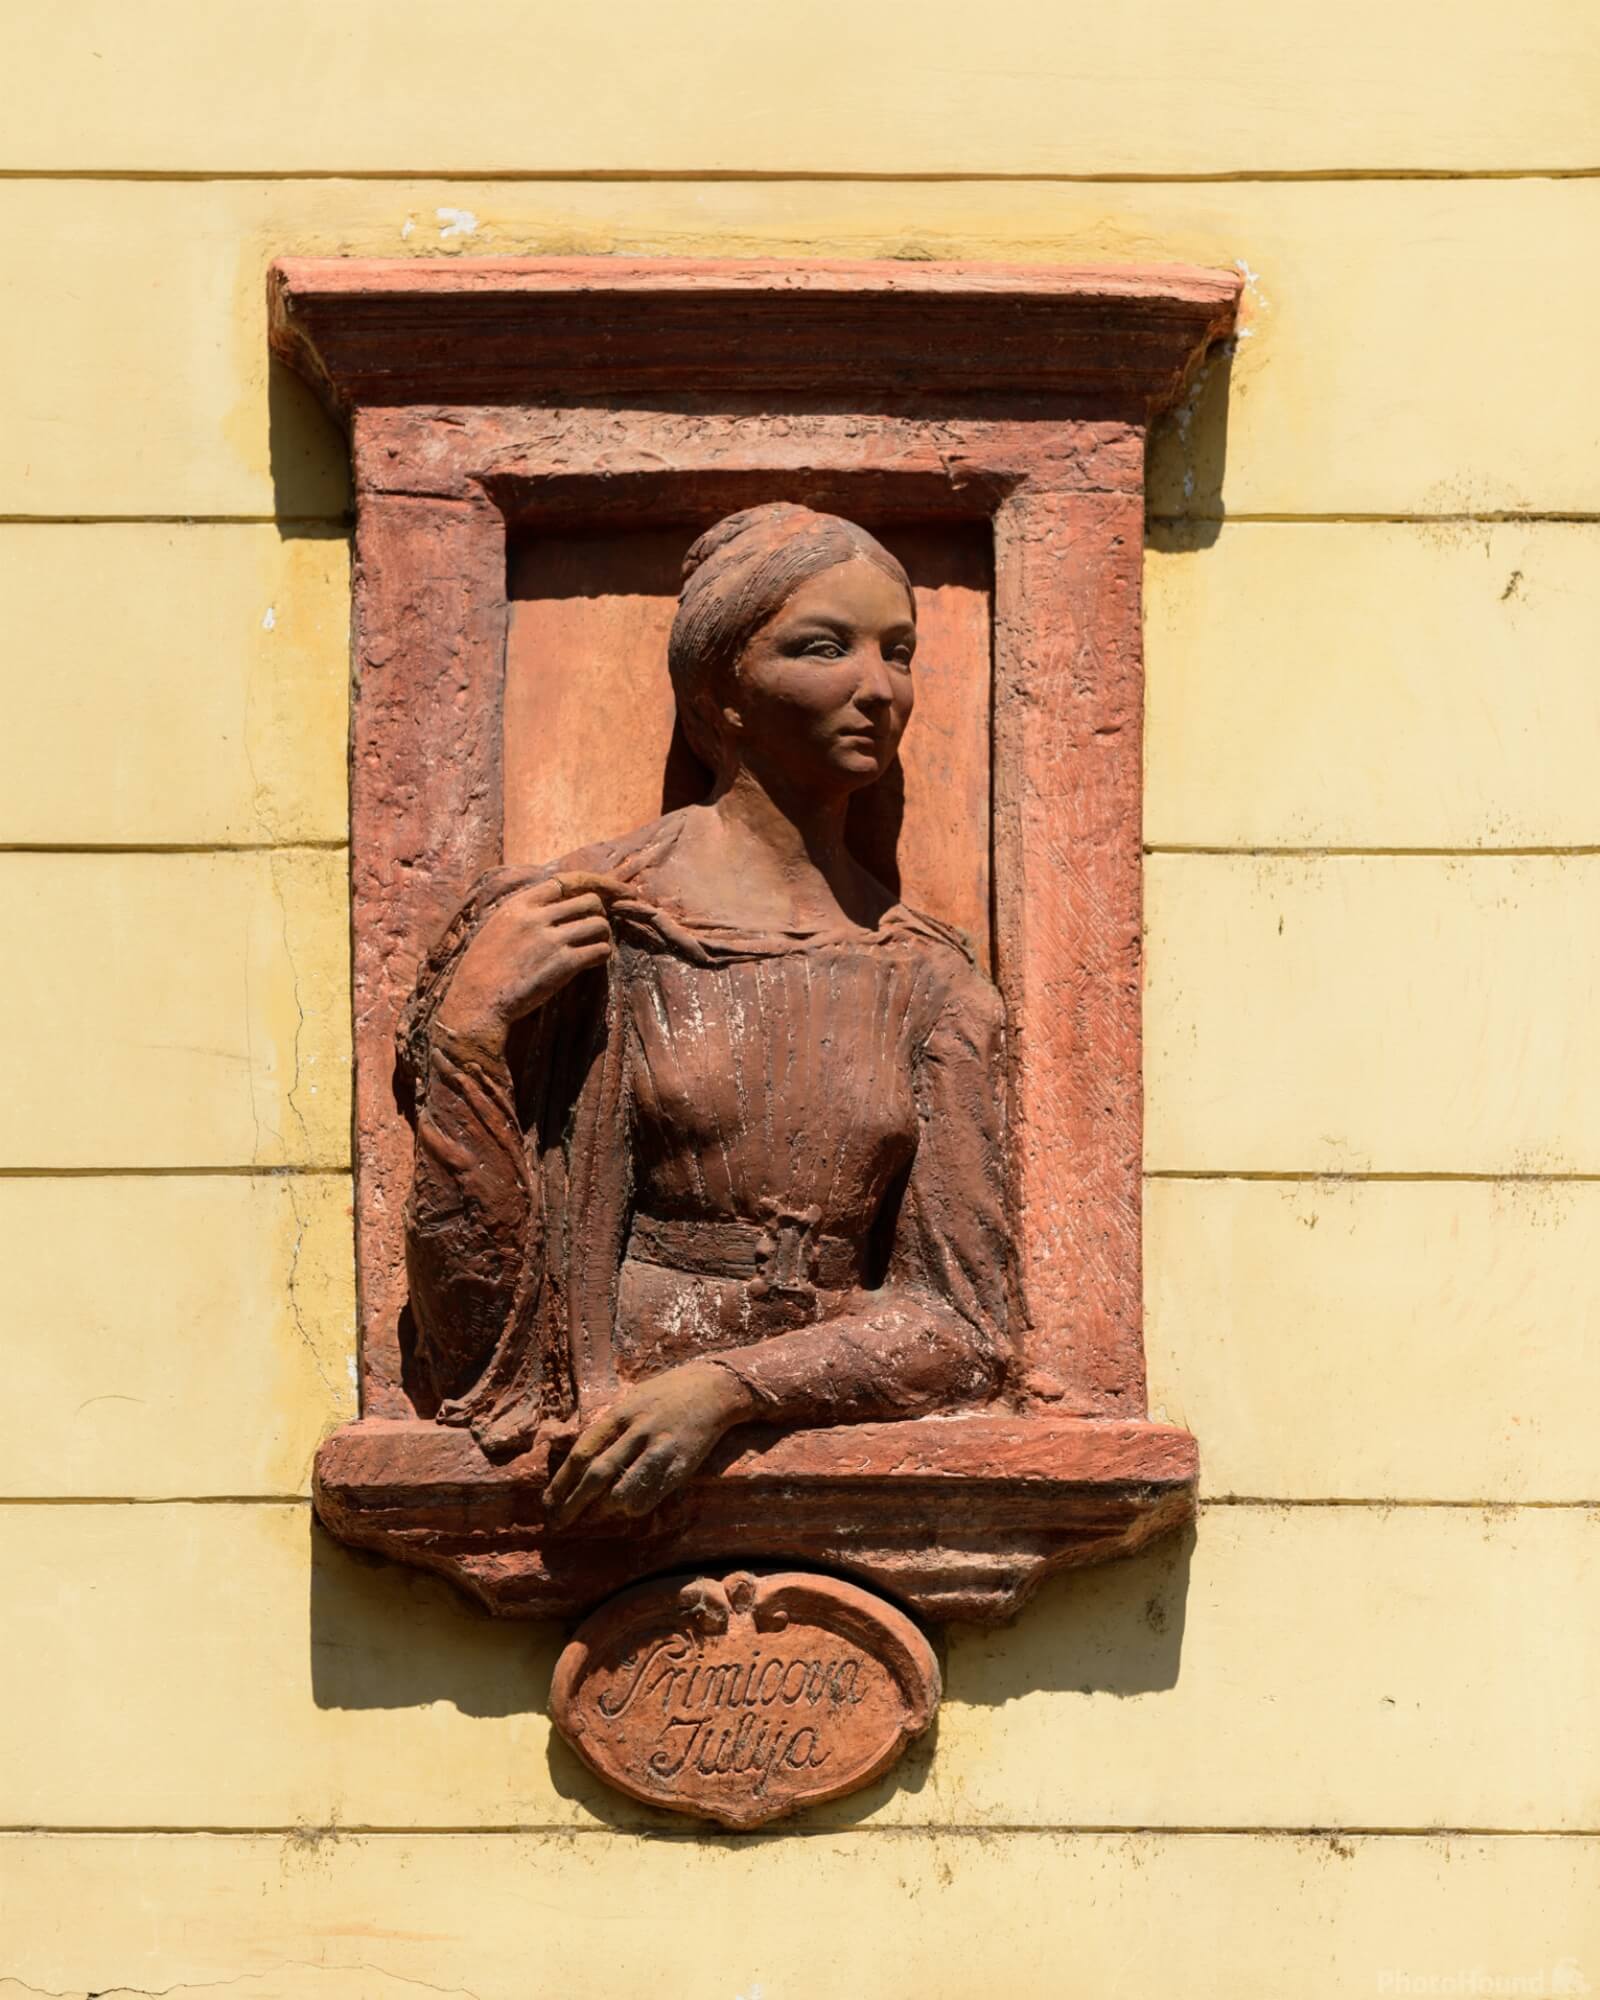 Image of Primicova Julija by Luka Esenko